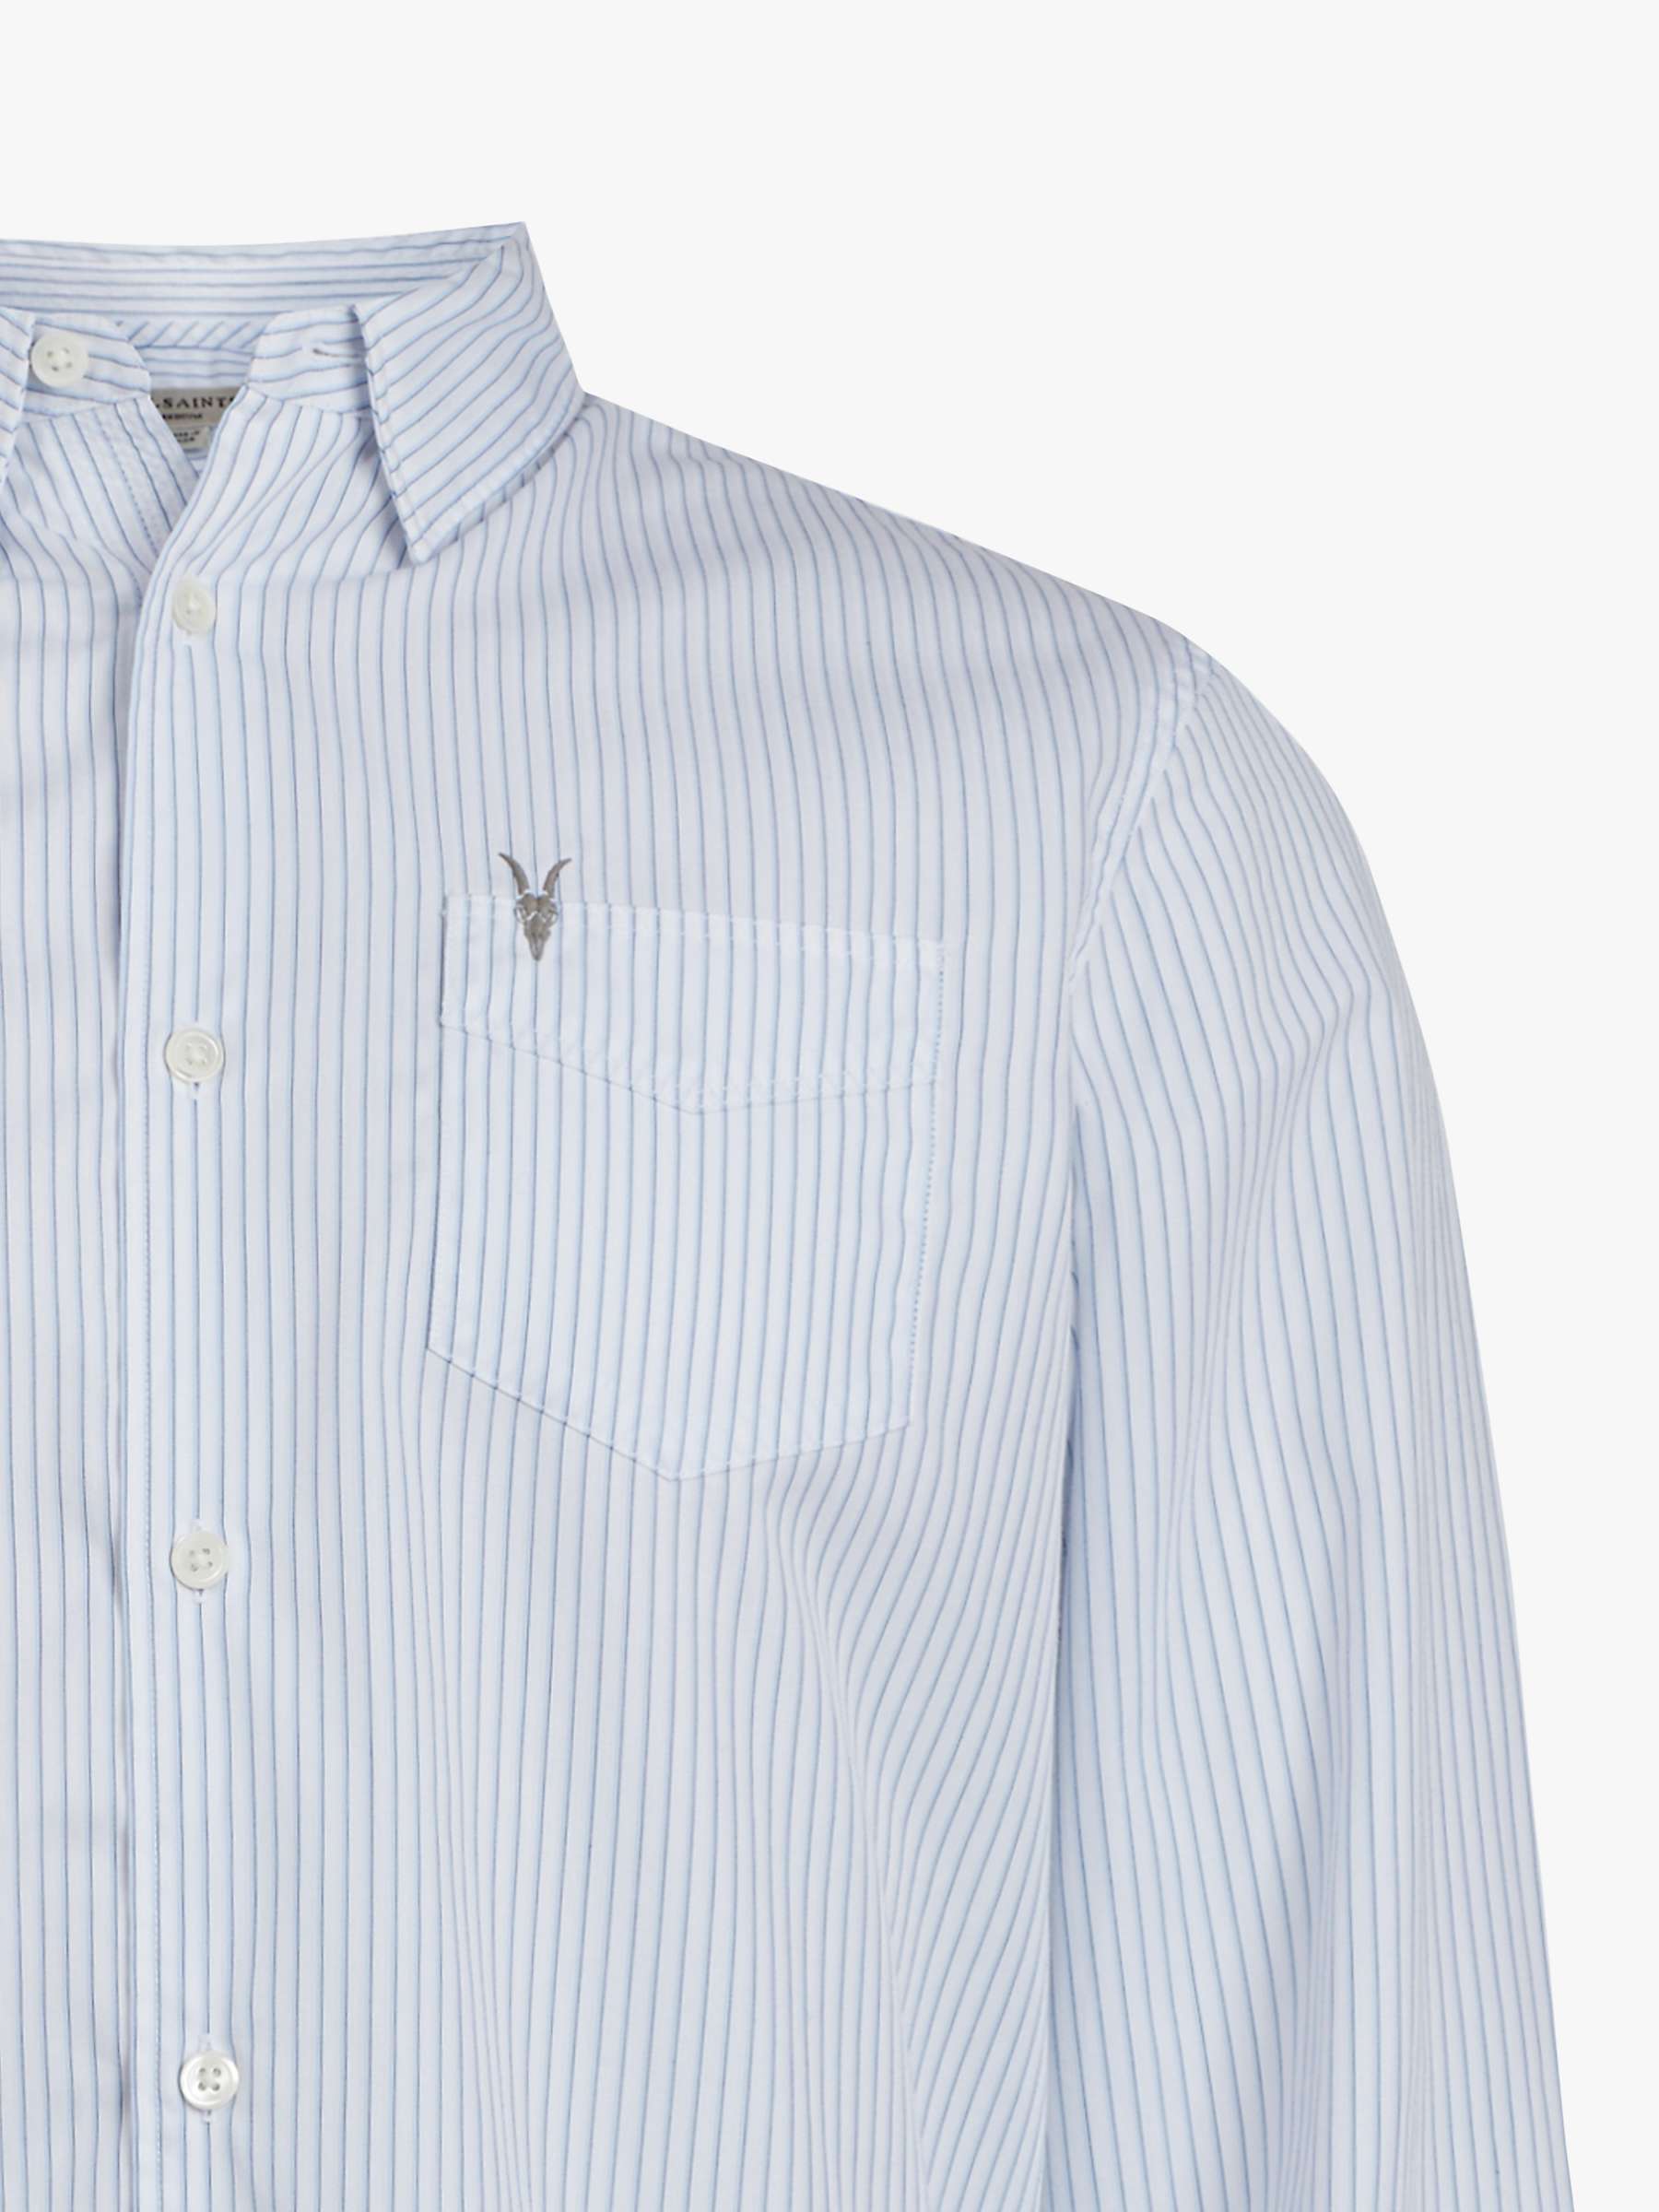 Buy AllSaints Rowland Long Sleeve Stripe Shirt, White/Blue Online at johnlewis.com